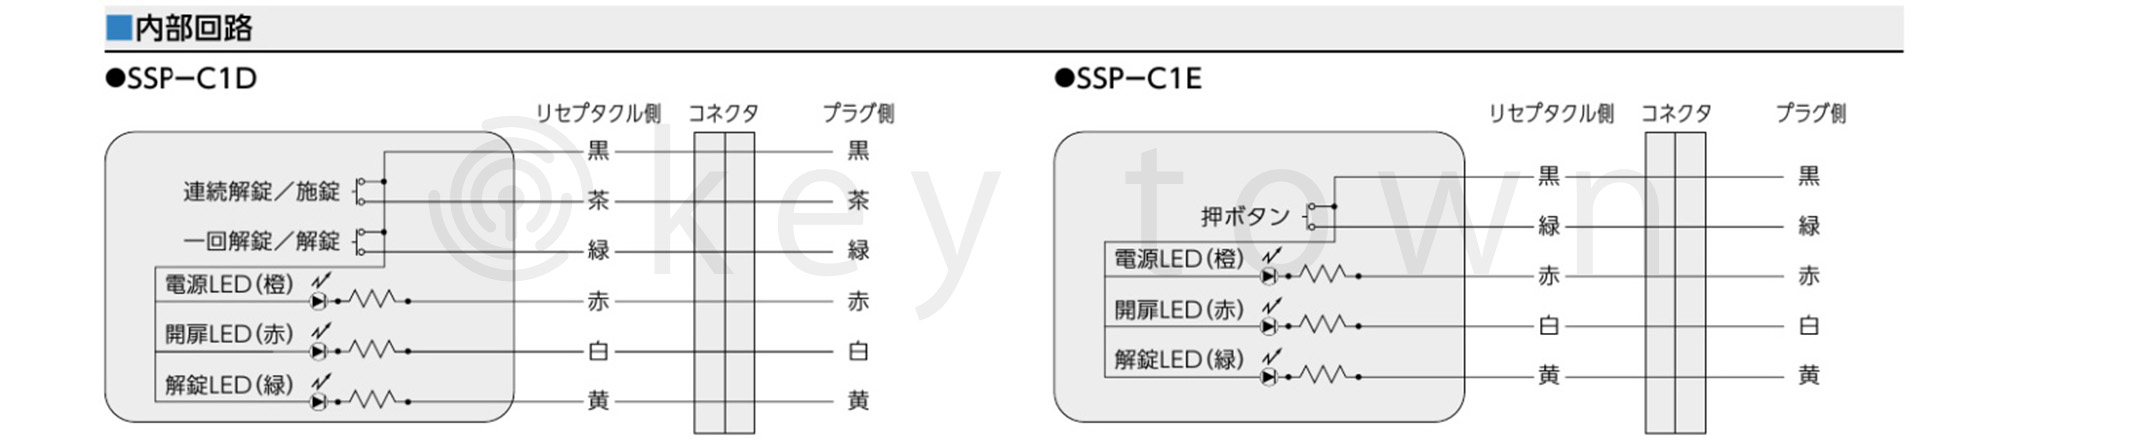 MIWA【美和ロック】 SSP-C1D 操作表示器 遠隔操作[MIWA SSP-C1D]｜鍵・シリンダーの格安ネット通販【鍵TOWN】